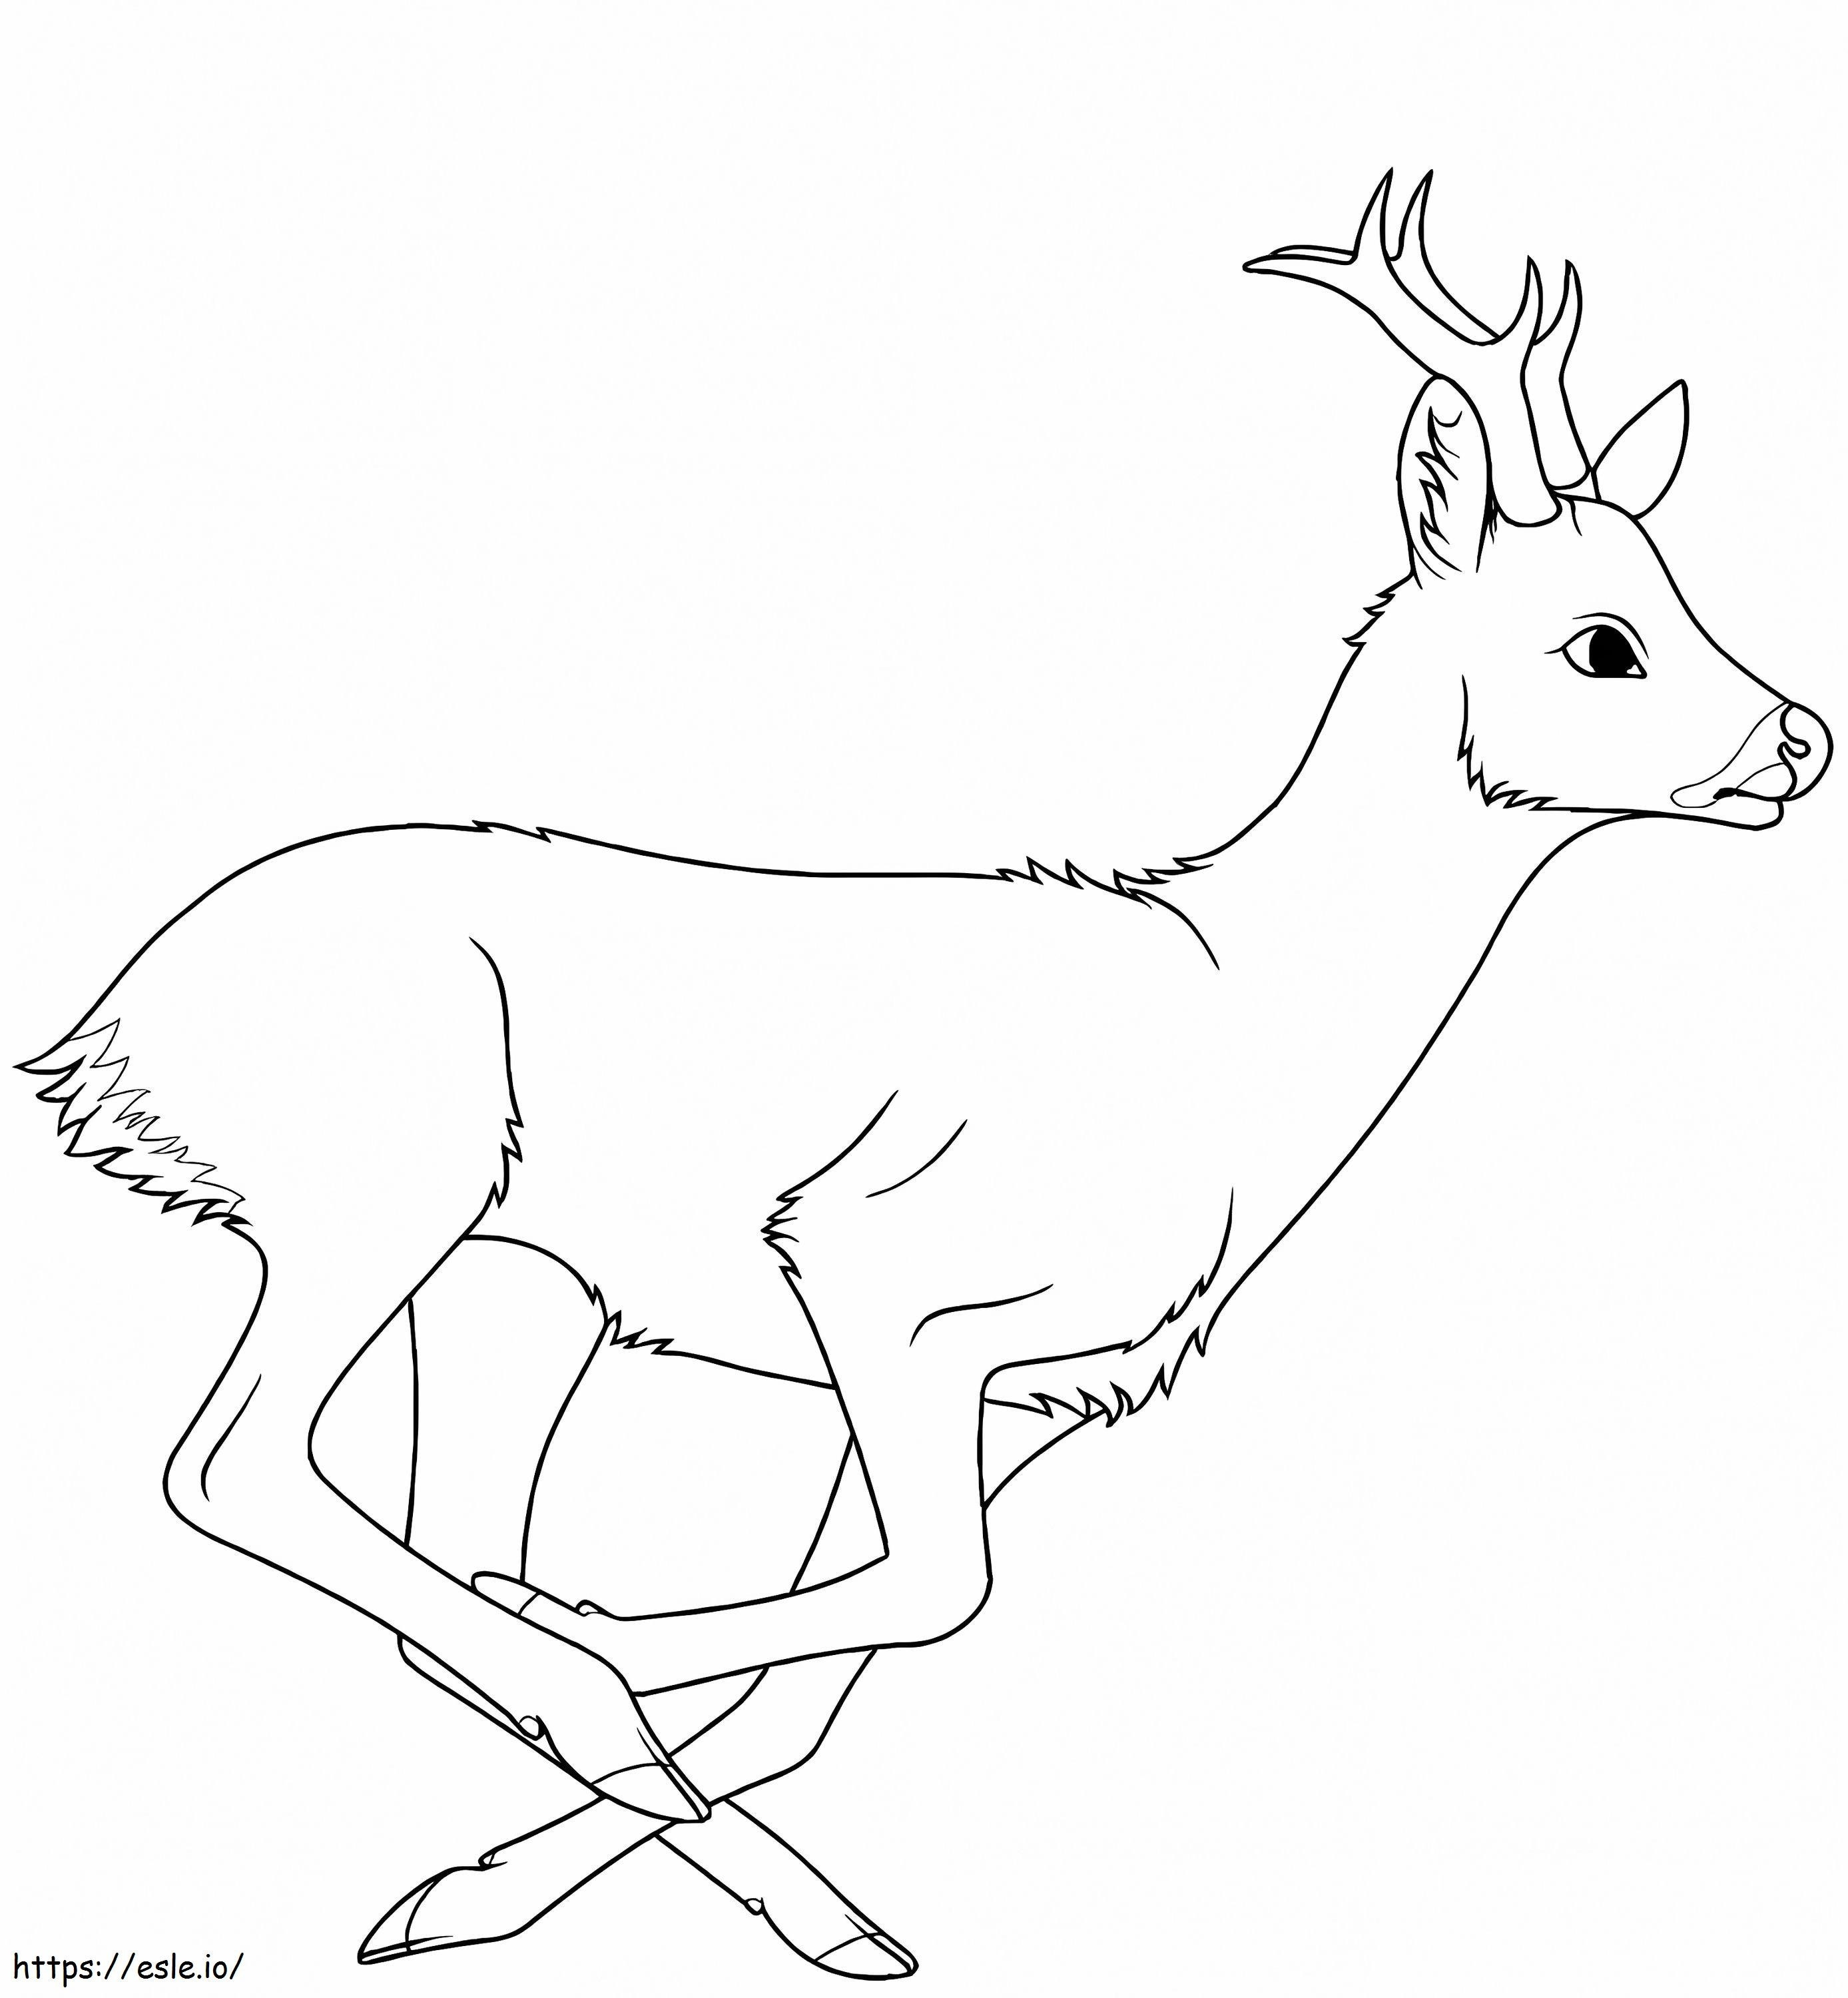 Deer Is Running coloring page